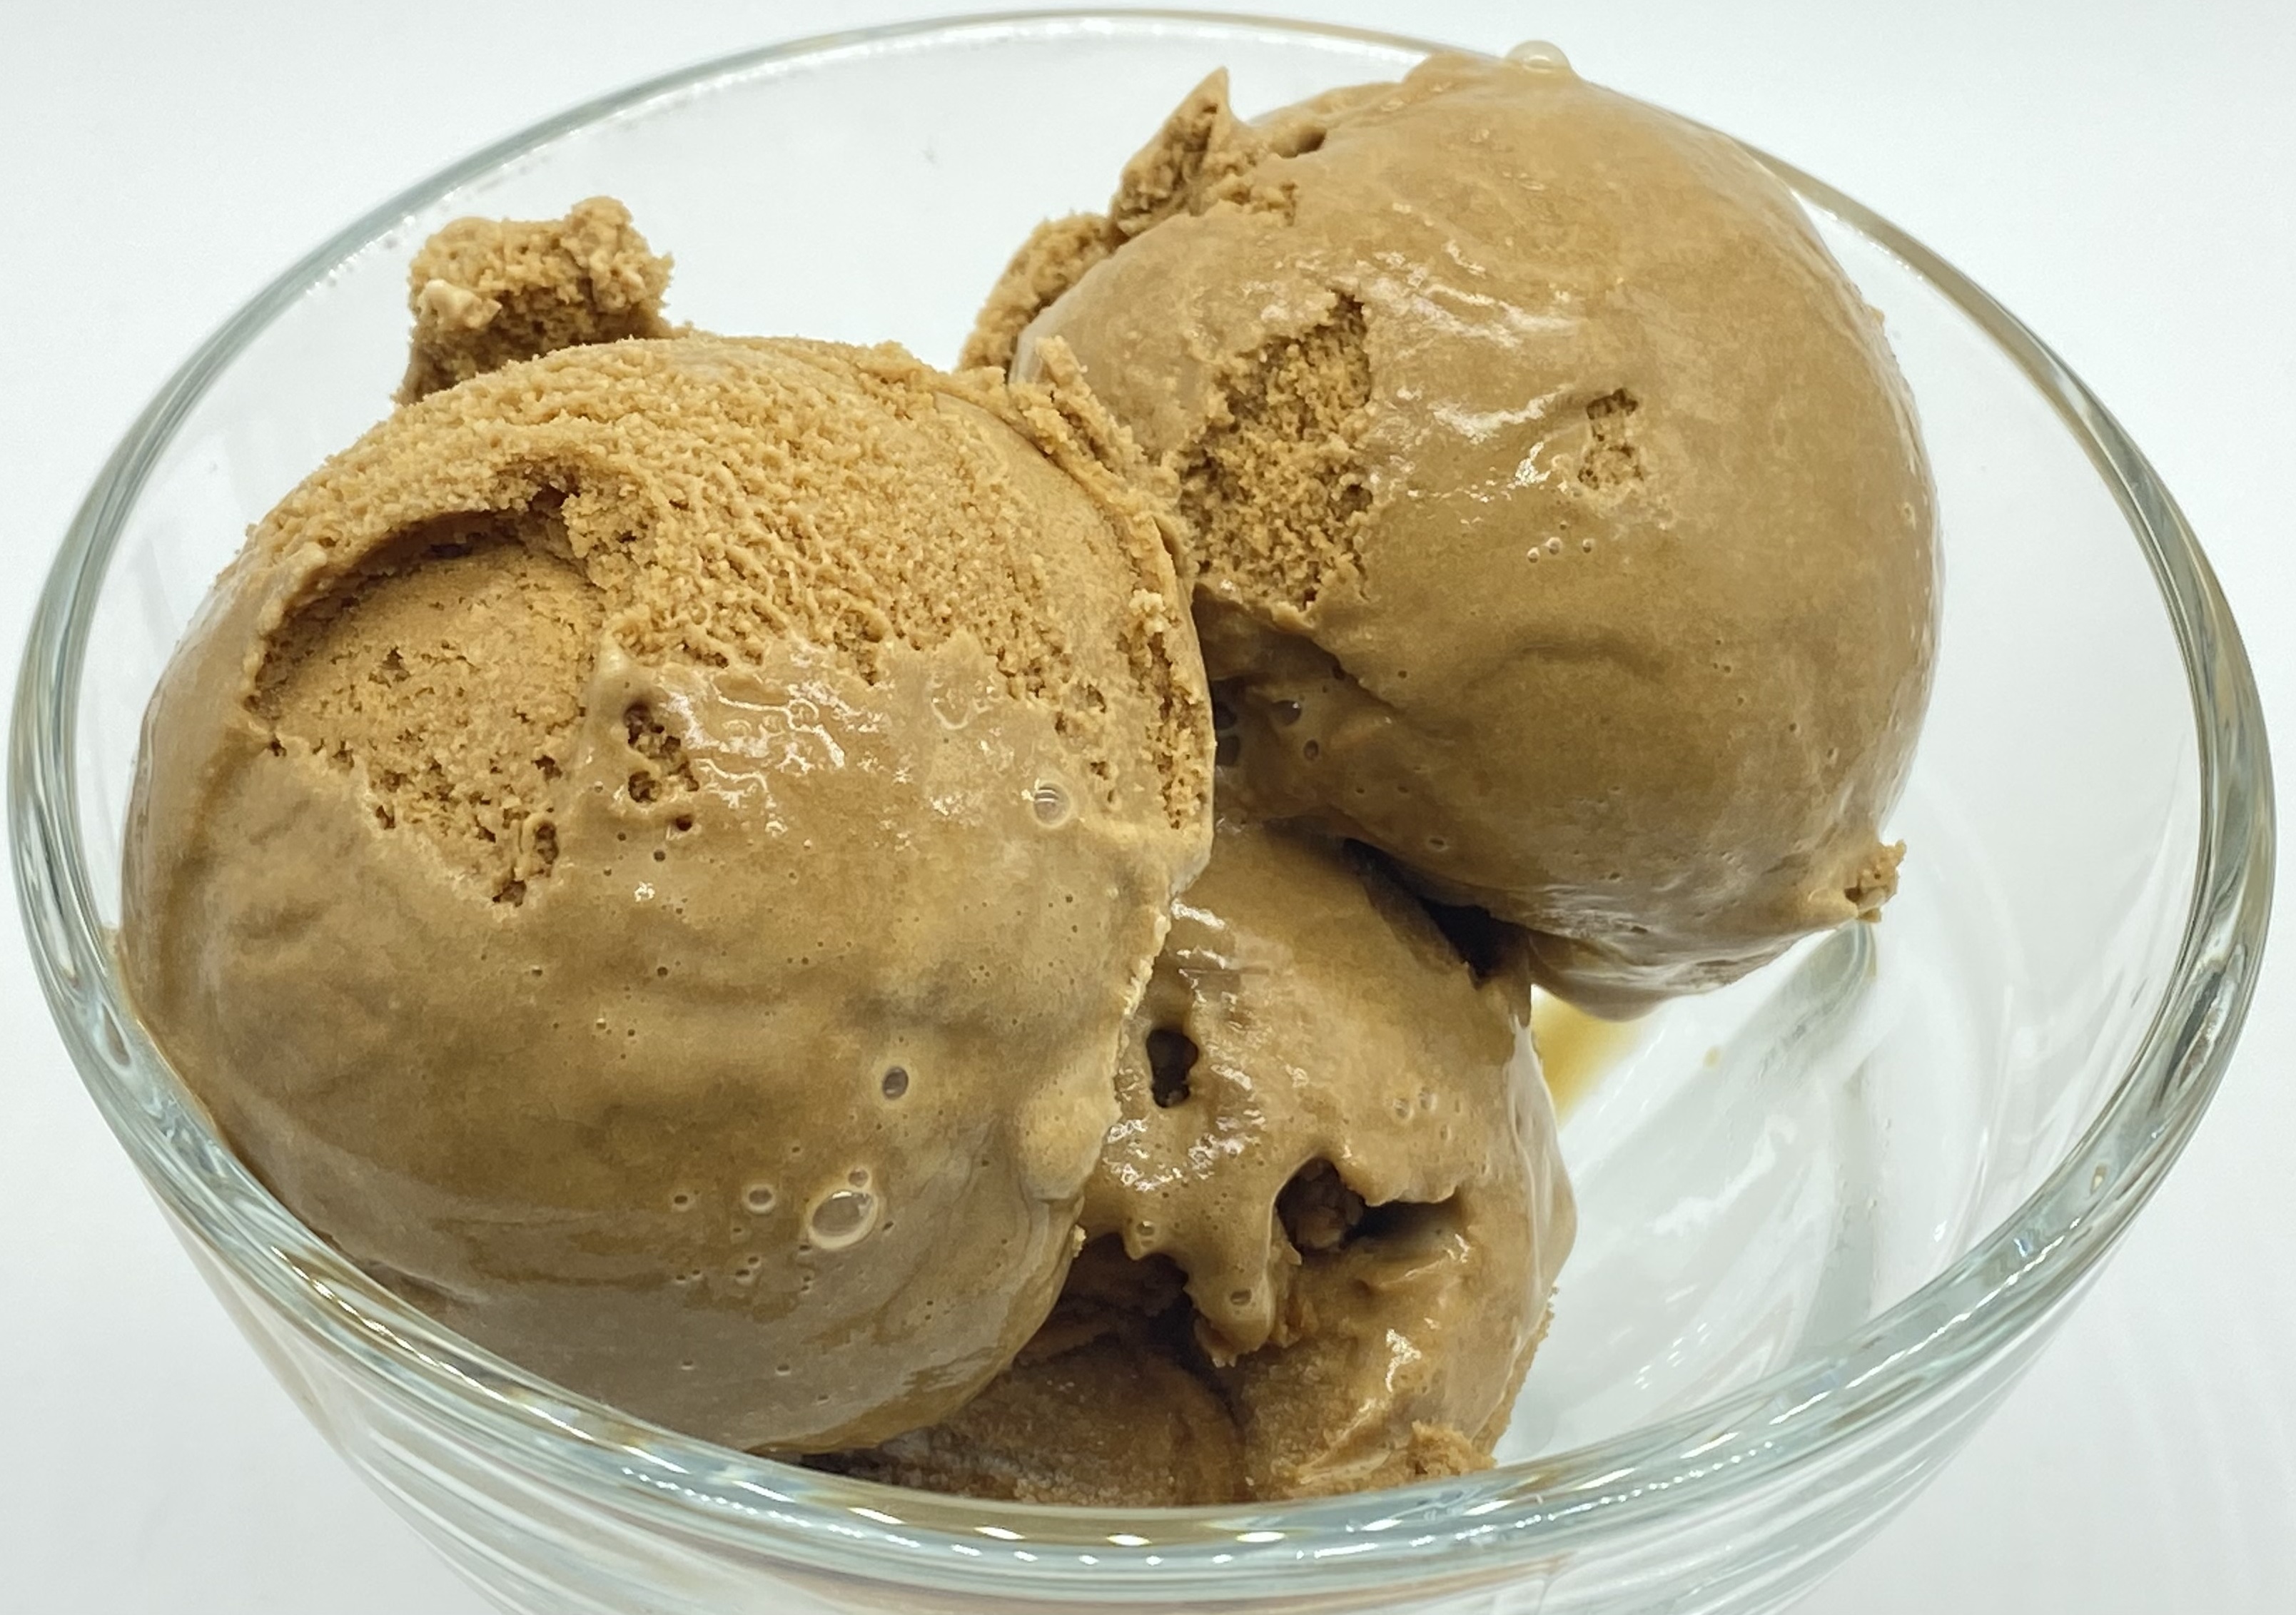 Caramel brown ice cream